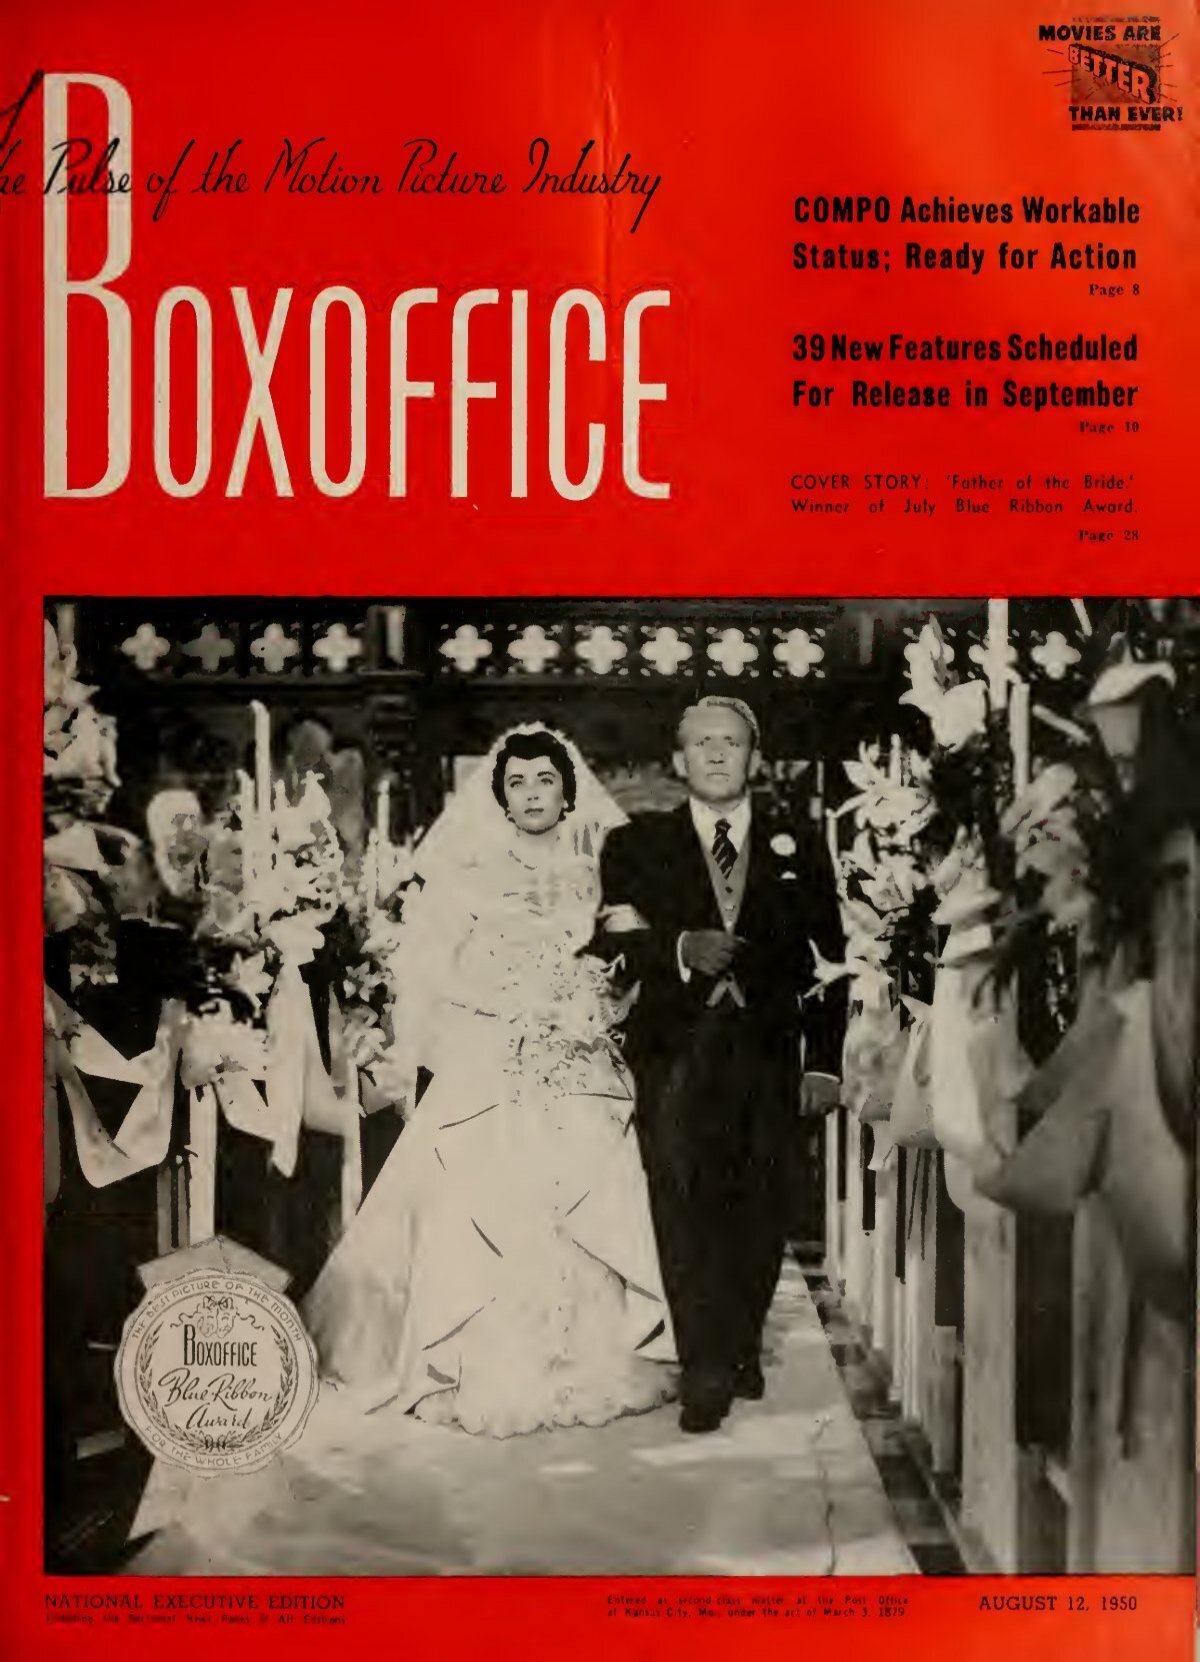 Boxoffice-August.12.1950